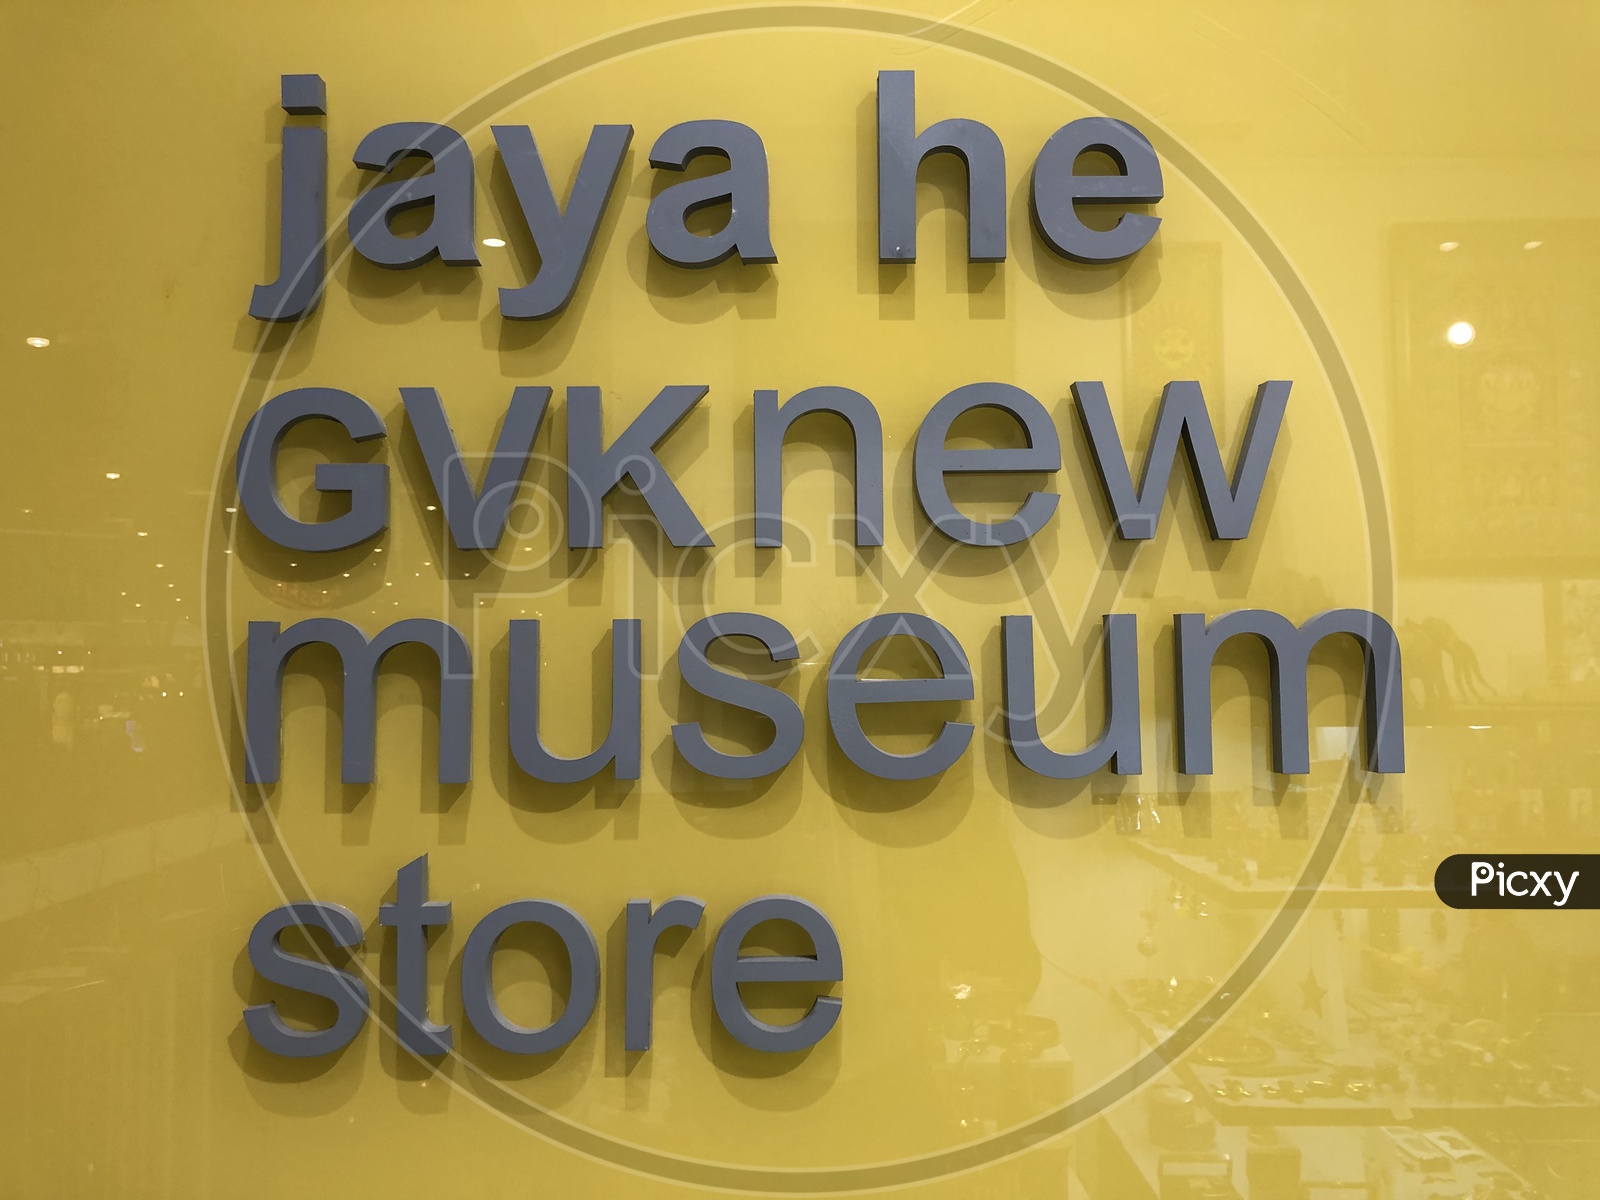 Name Board Closeup of a  Jaya he GVK new museum Store